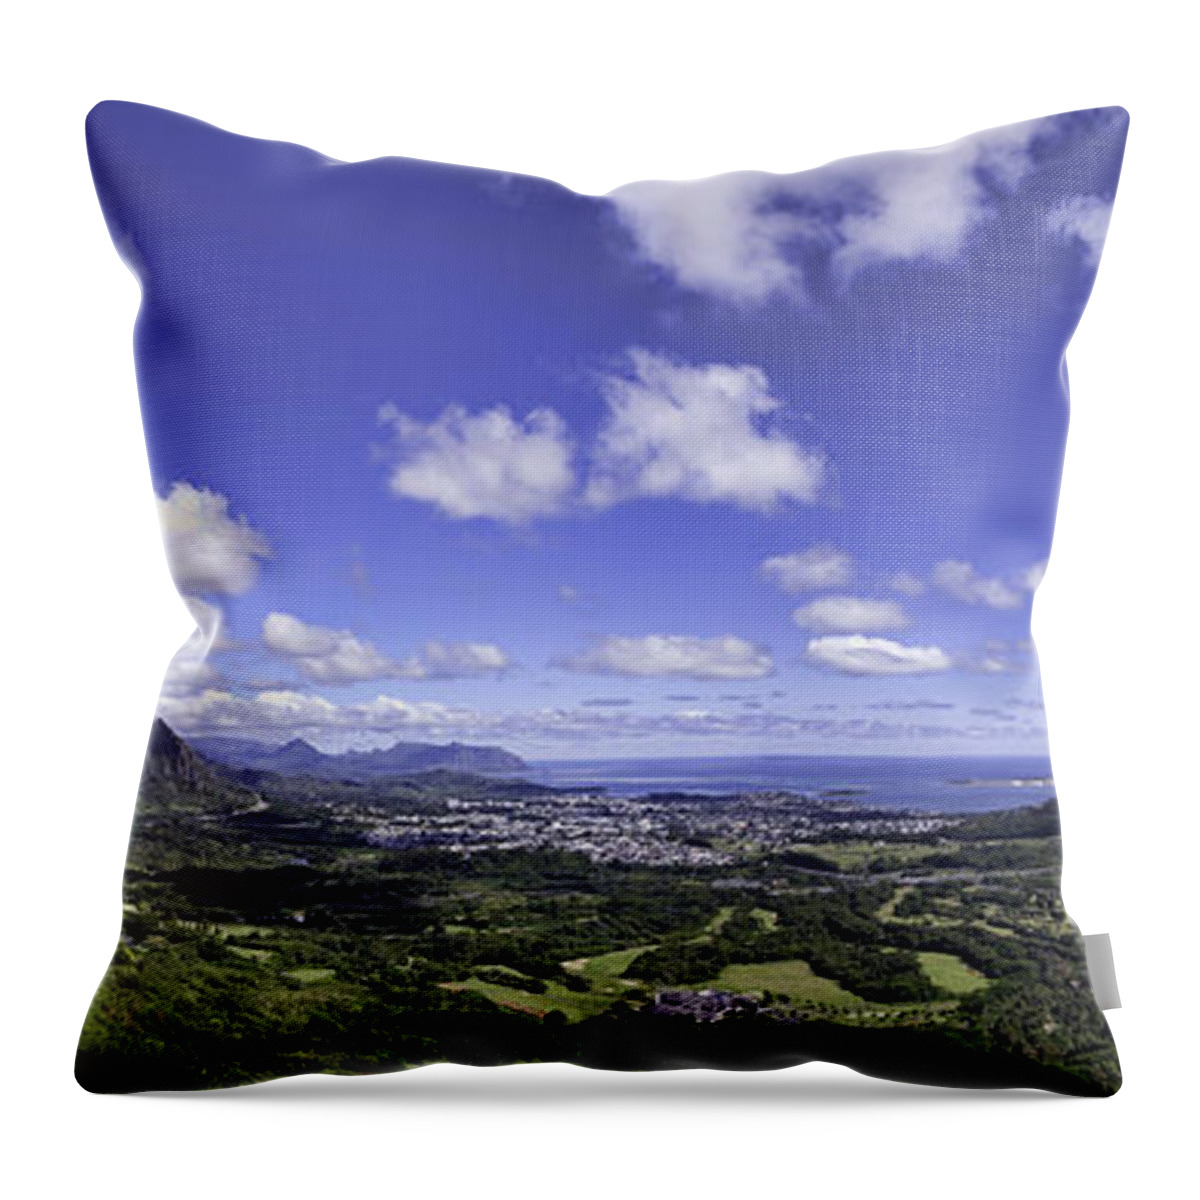 Hawaii Throw Pillow featuring the photograph Pali Lookout Panorama by Dan McManus